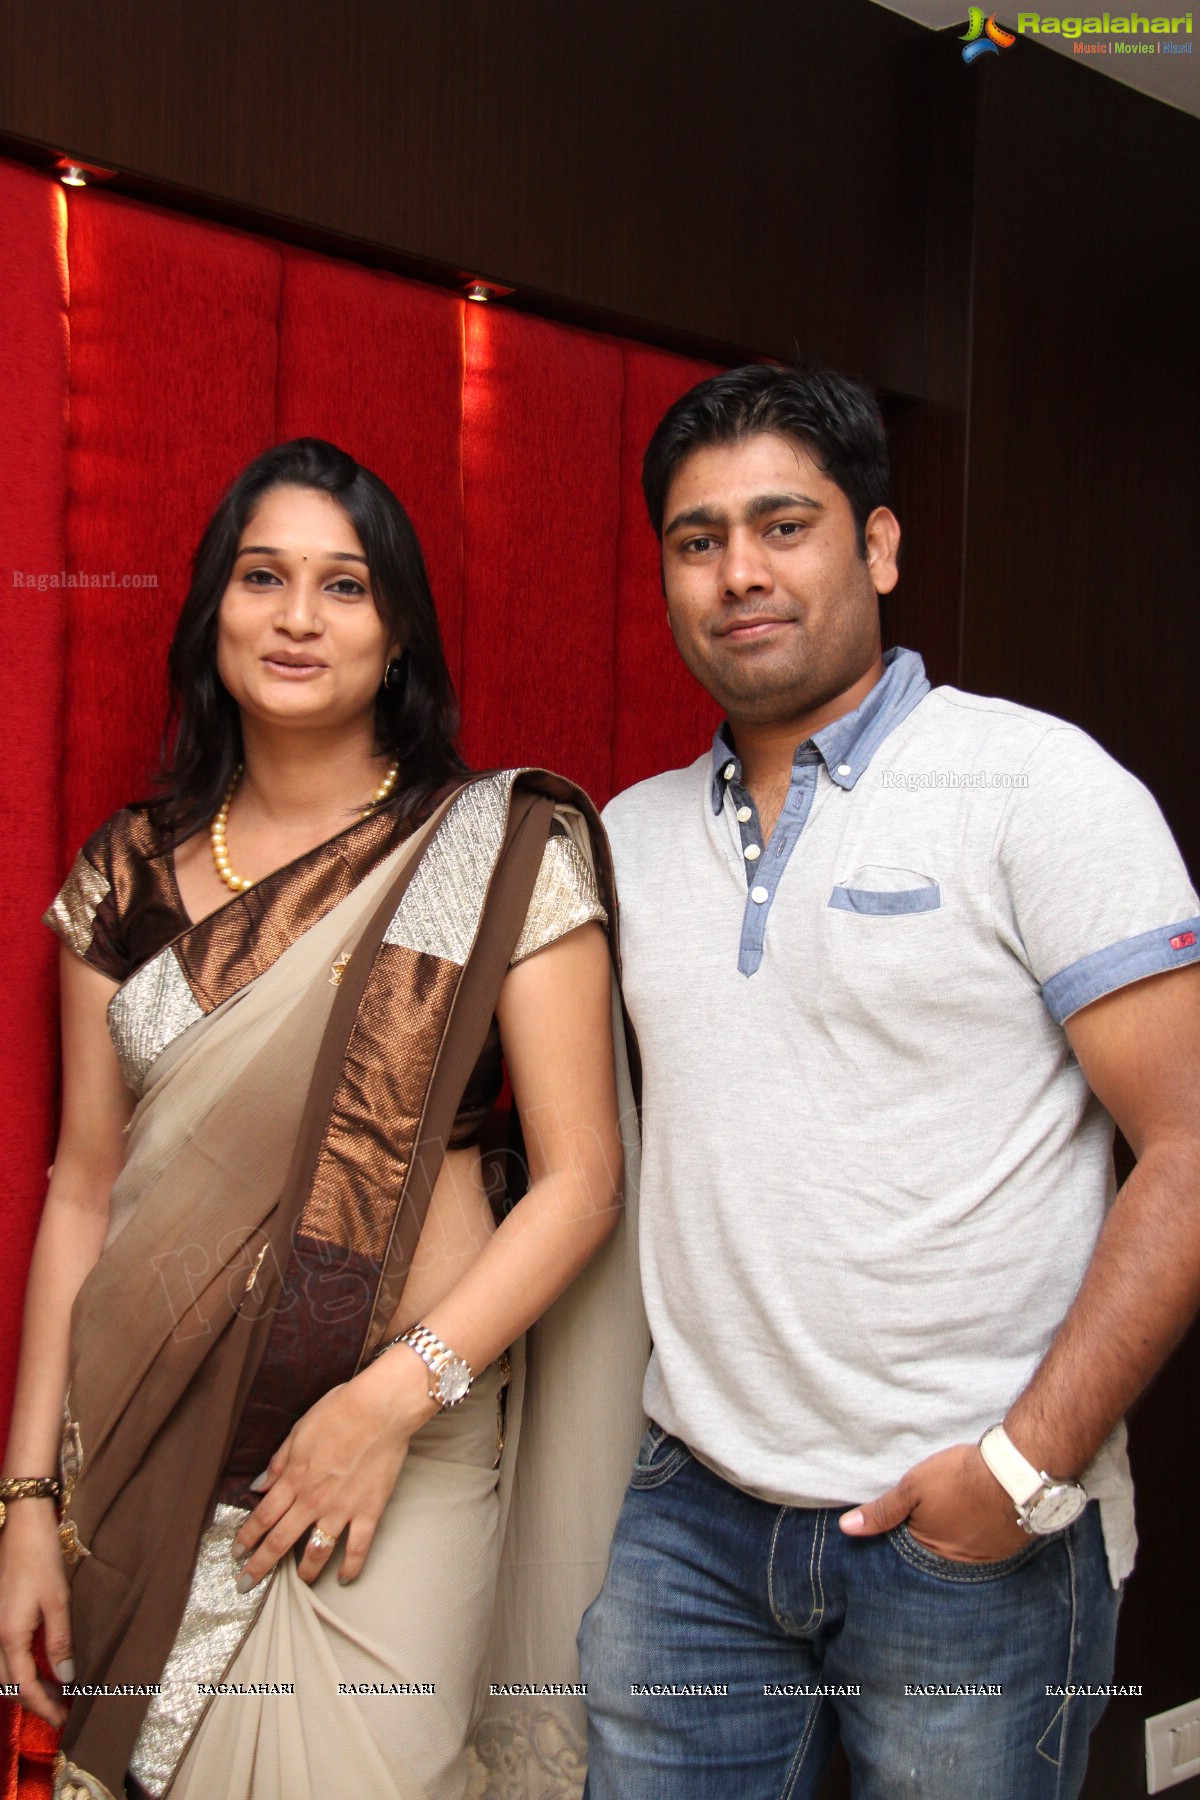 Diwali Dhamaka with Tambola | Hosts: Anju and Chandra